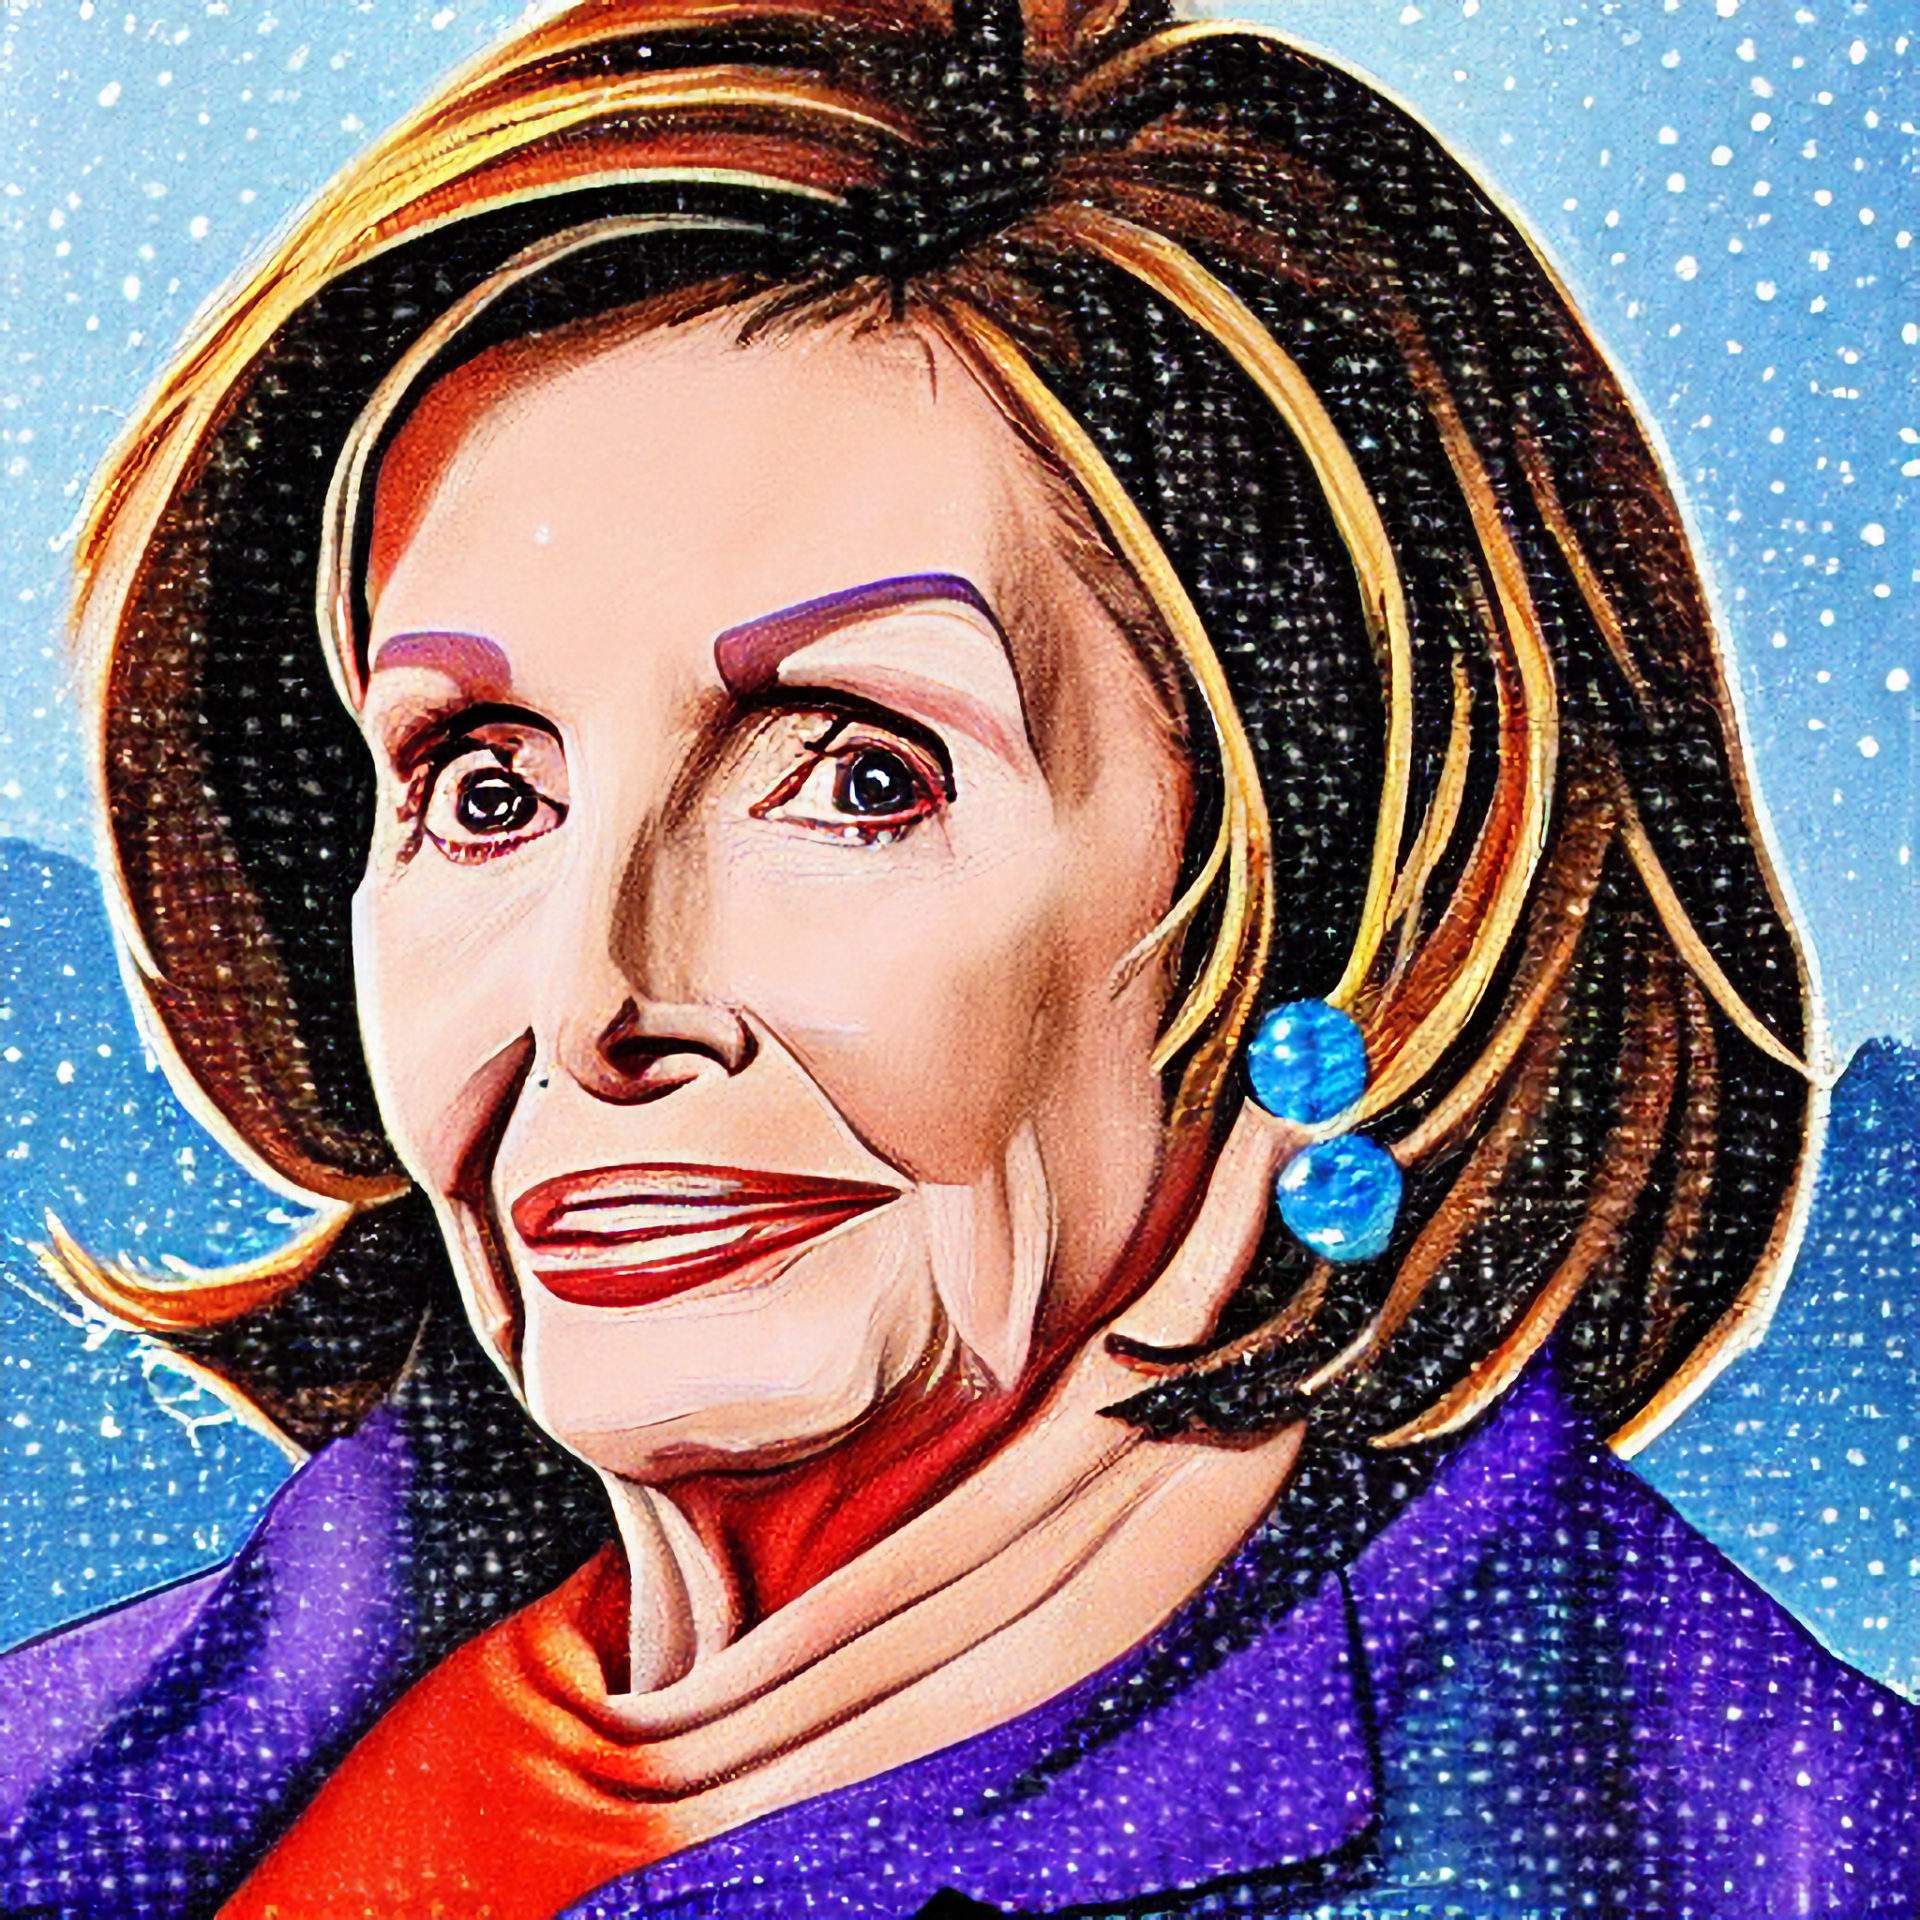 Nice painting of Nancy Pelosi